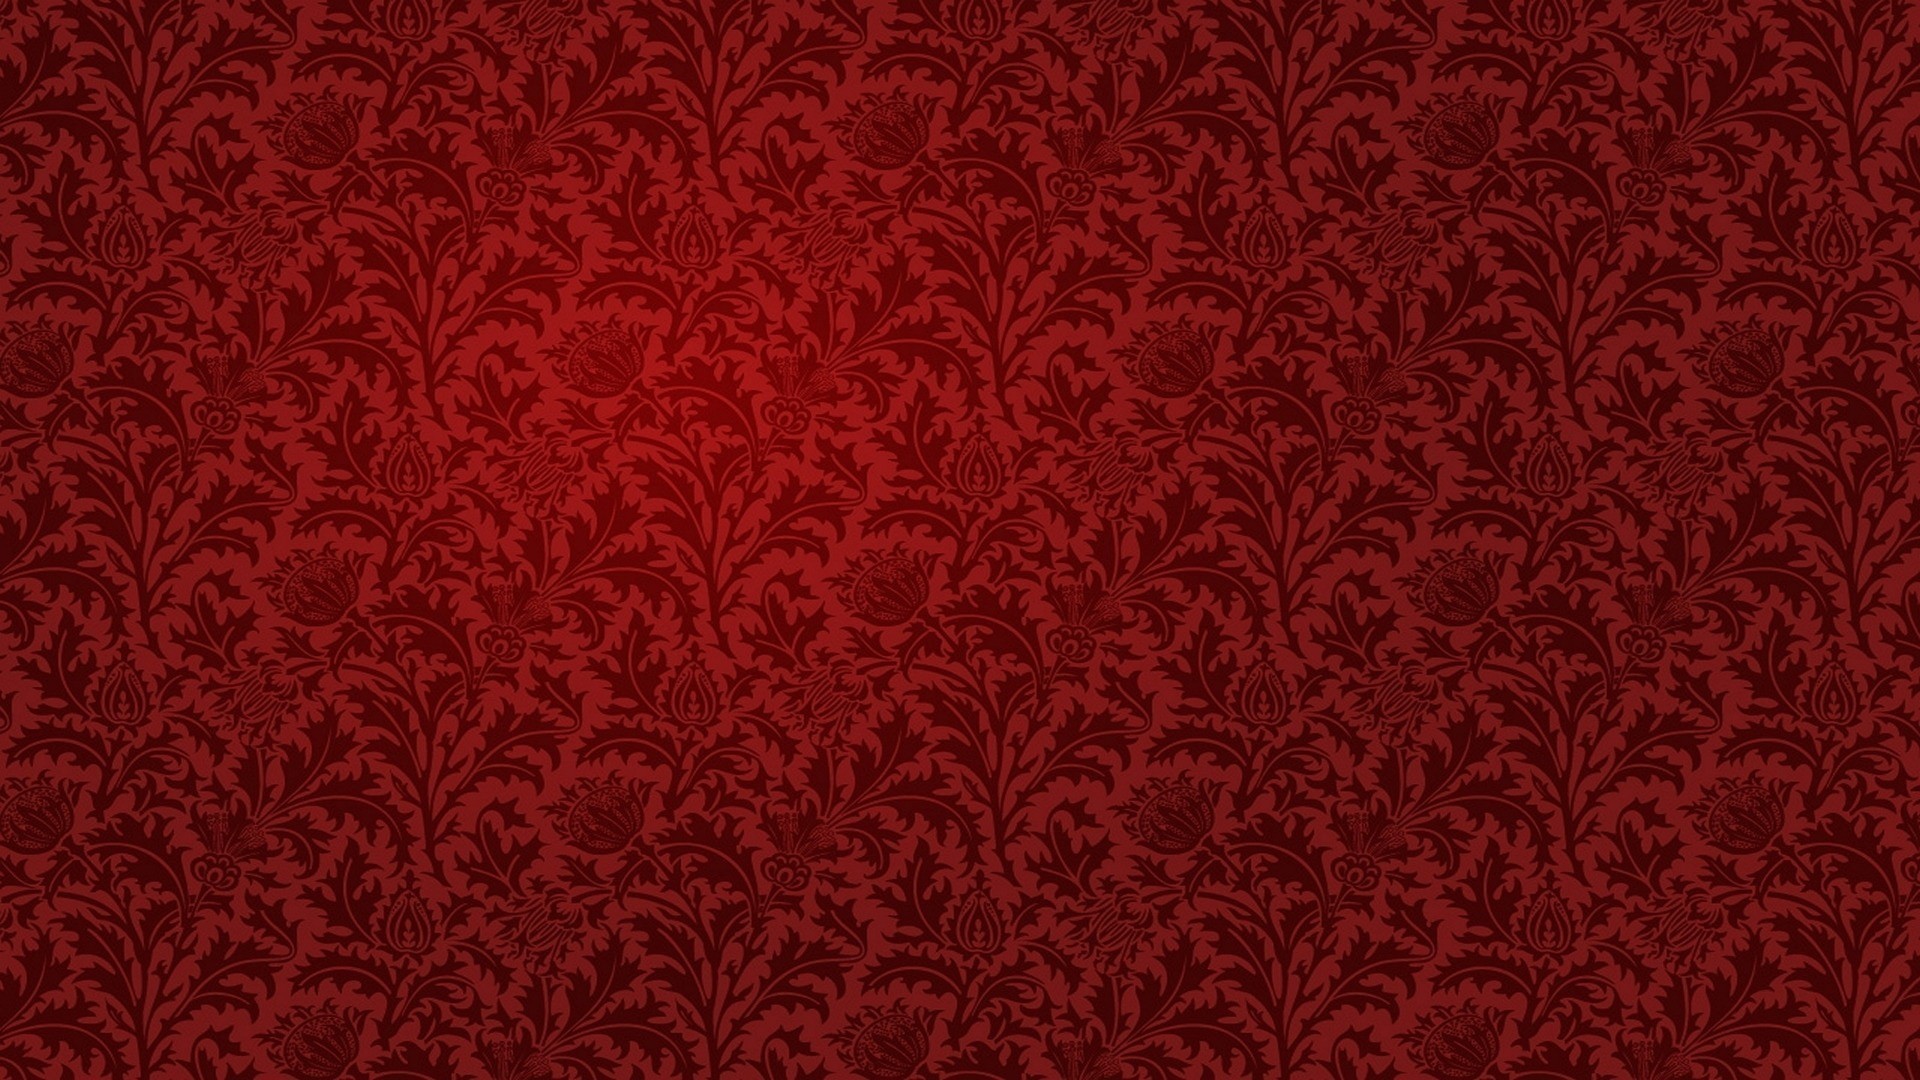 red digital camo wallpaper